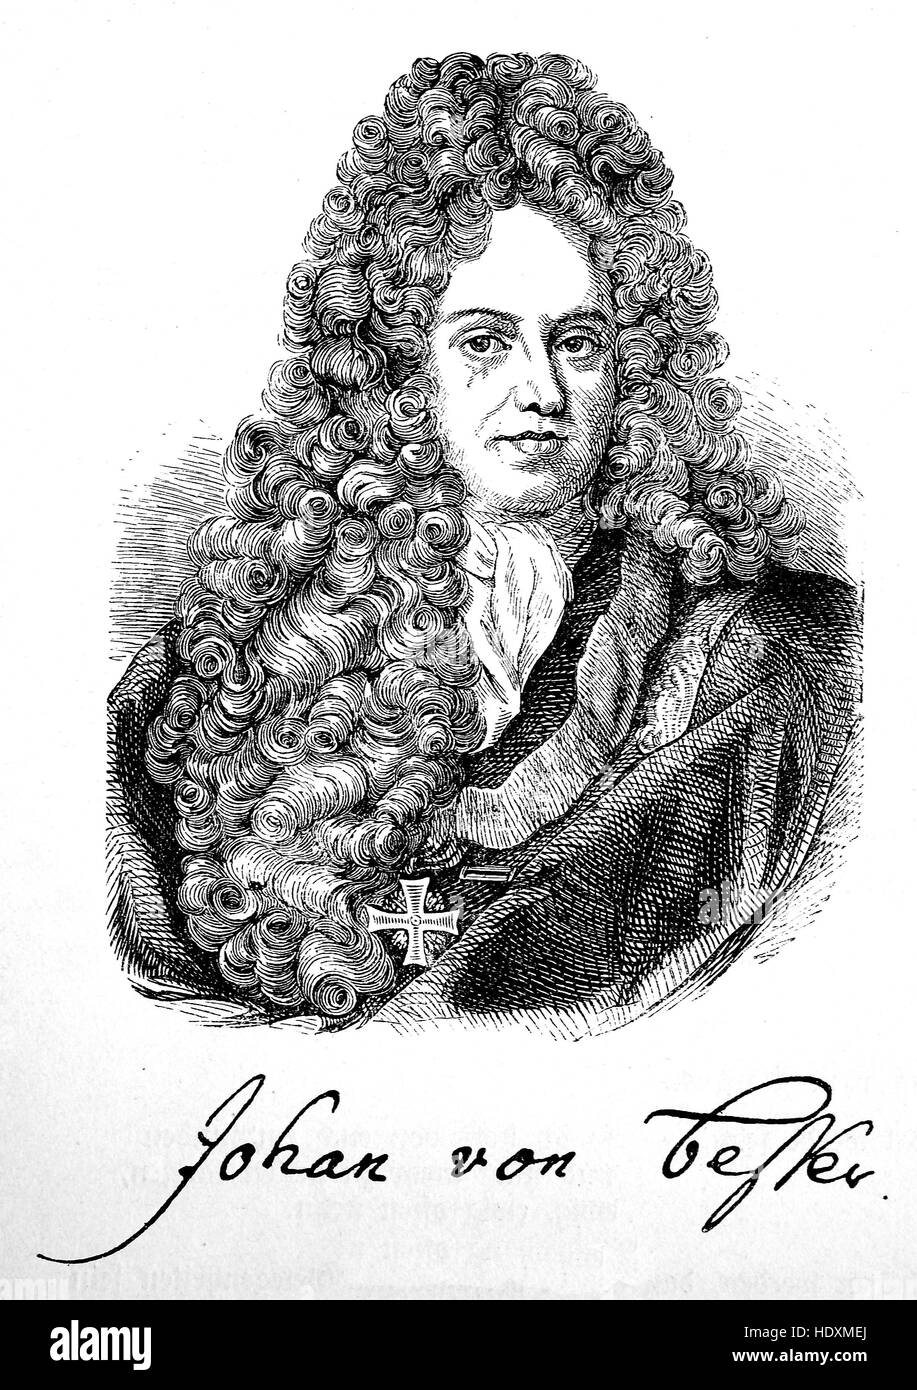 Johann von Besser, 1654-1729, a German poet, woodcut from the year 1882, digital improved Stock Photo